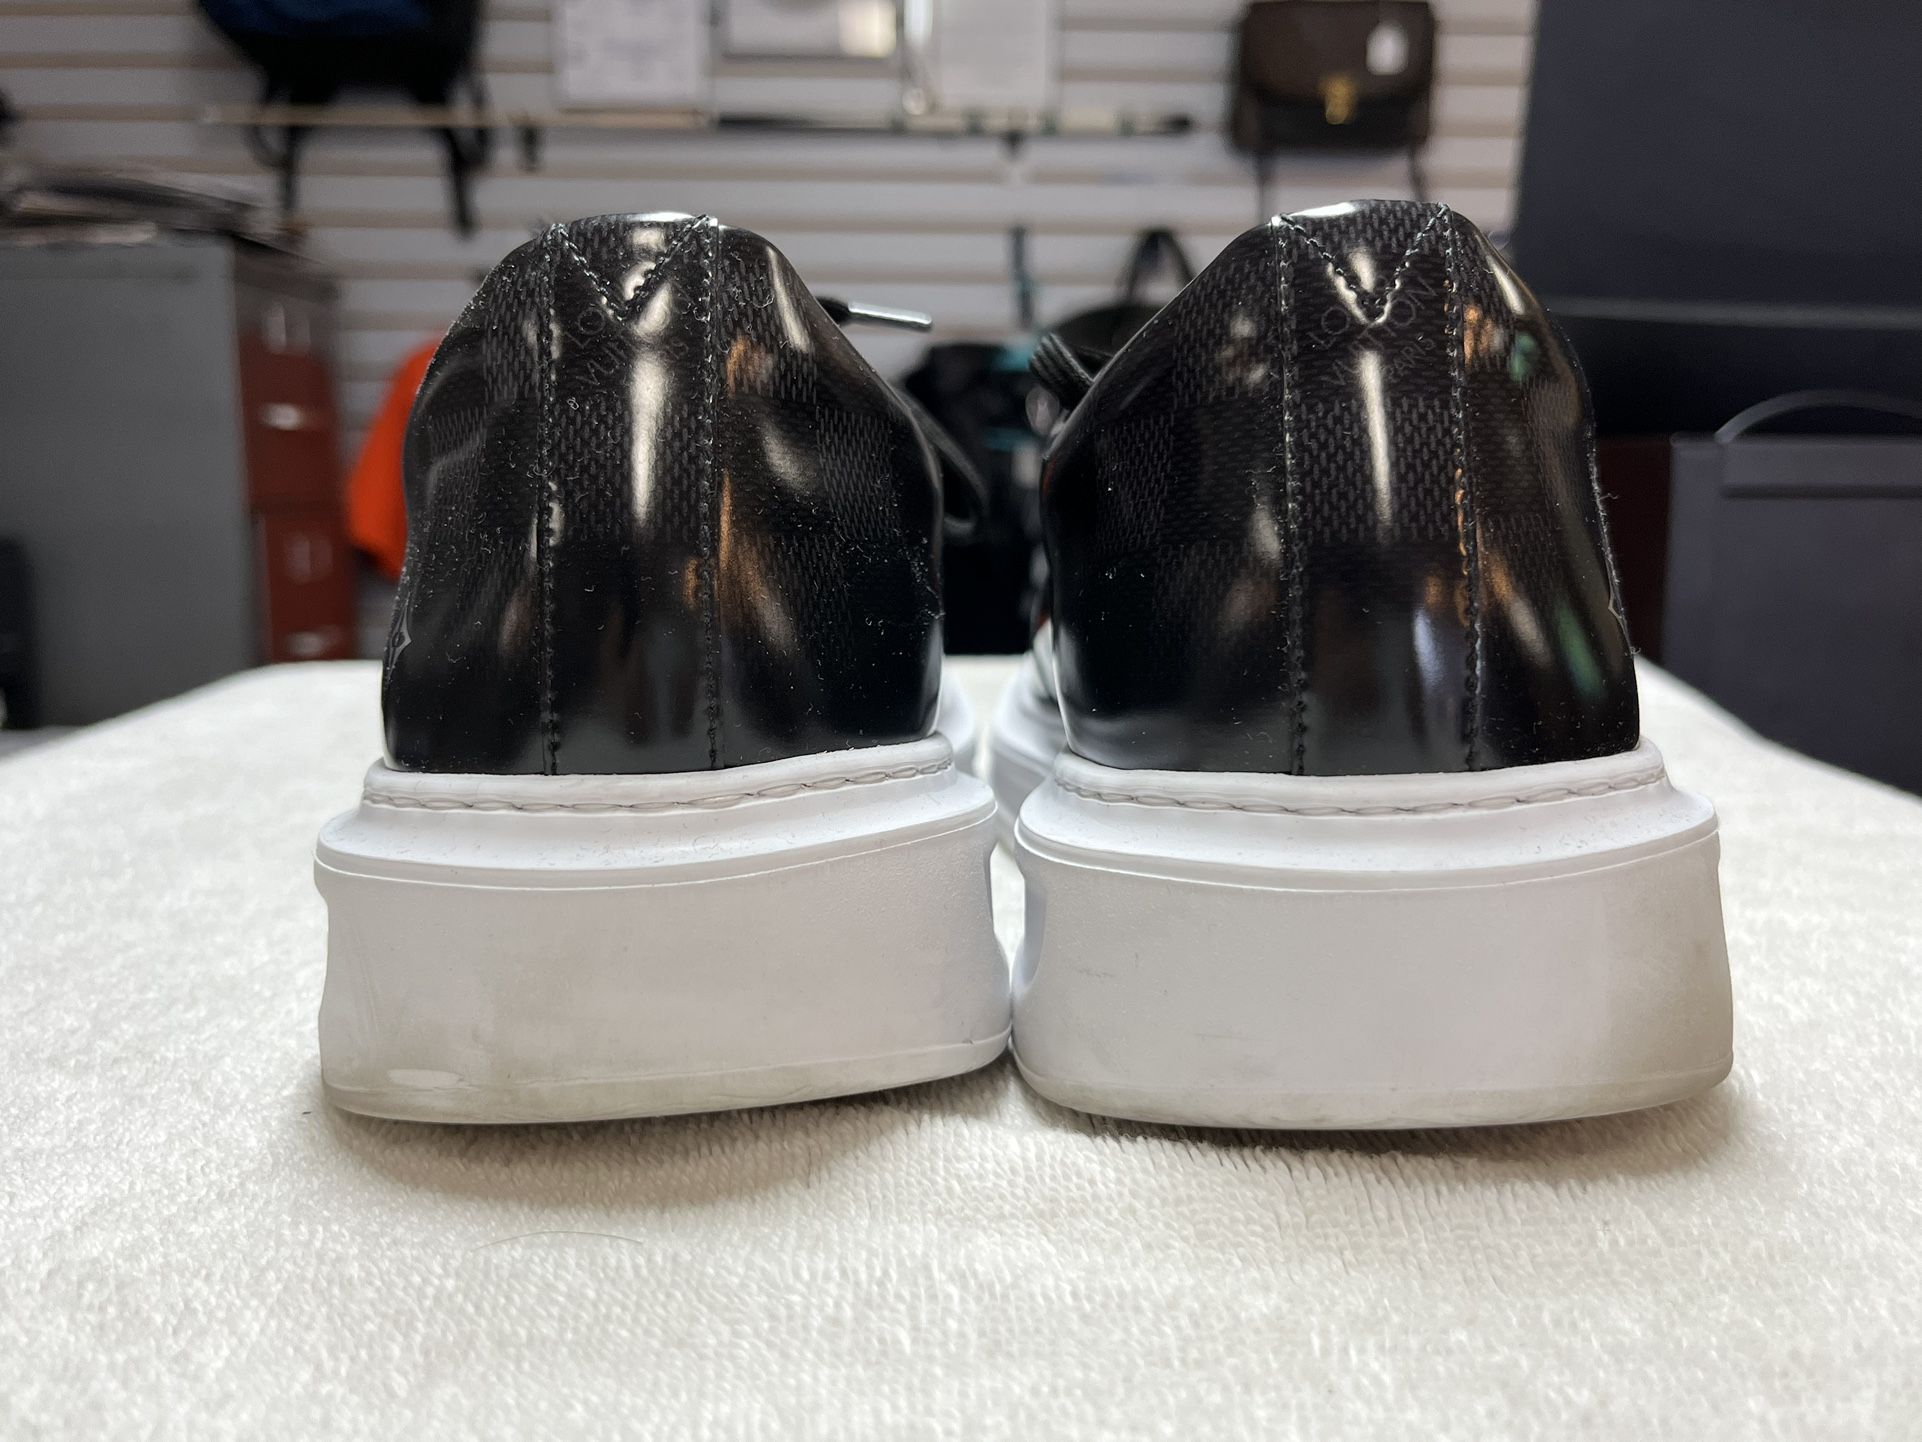 Louis Vuitton® Beverly Hills Sneaker Black. Size 09.5